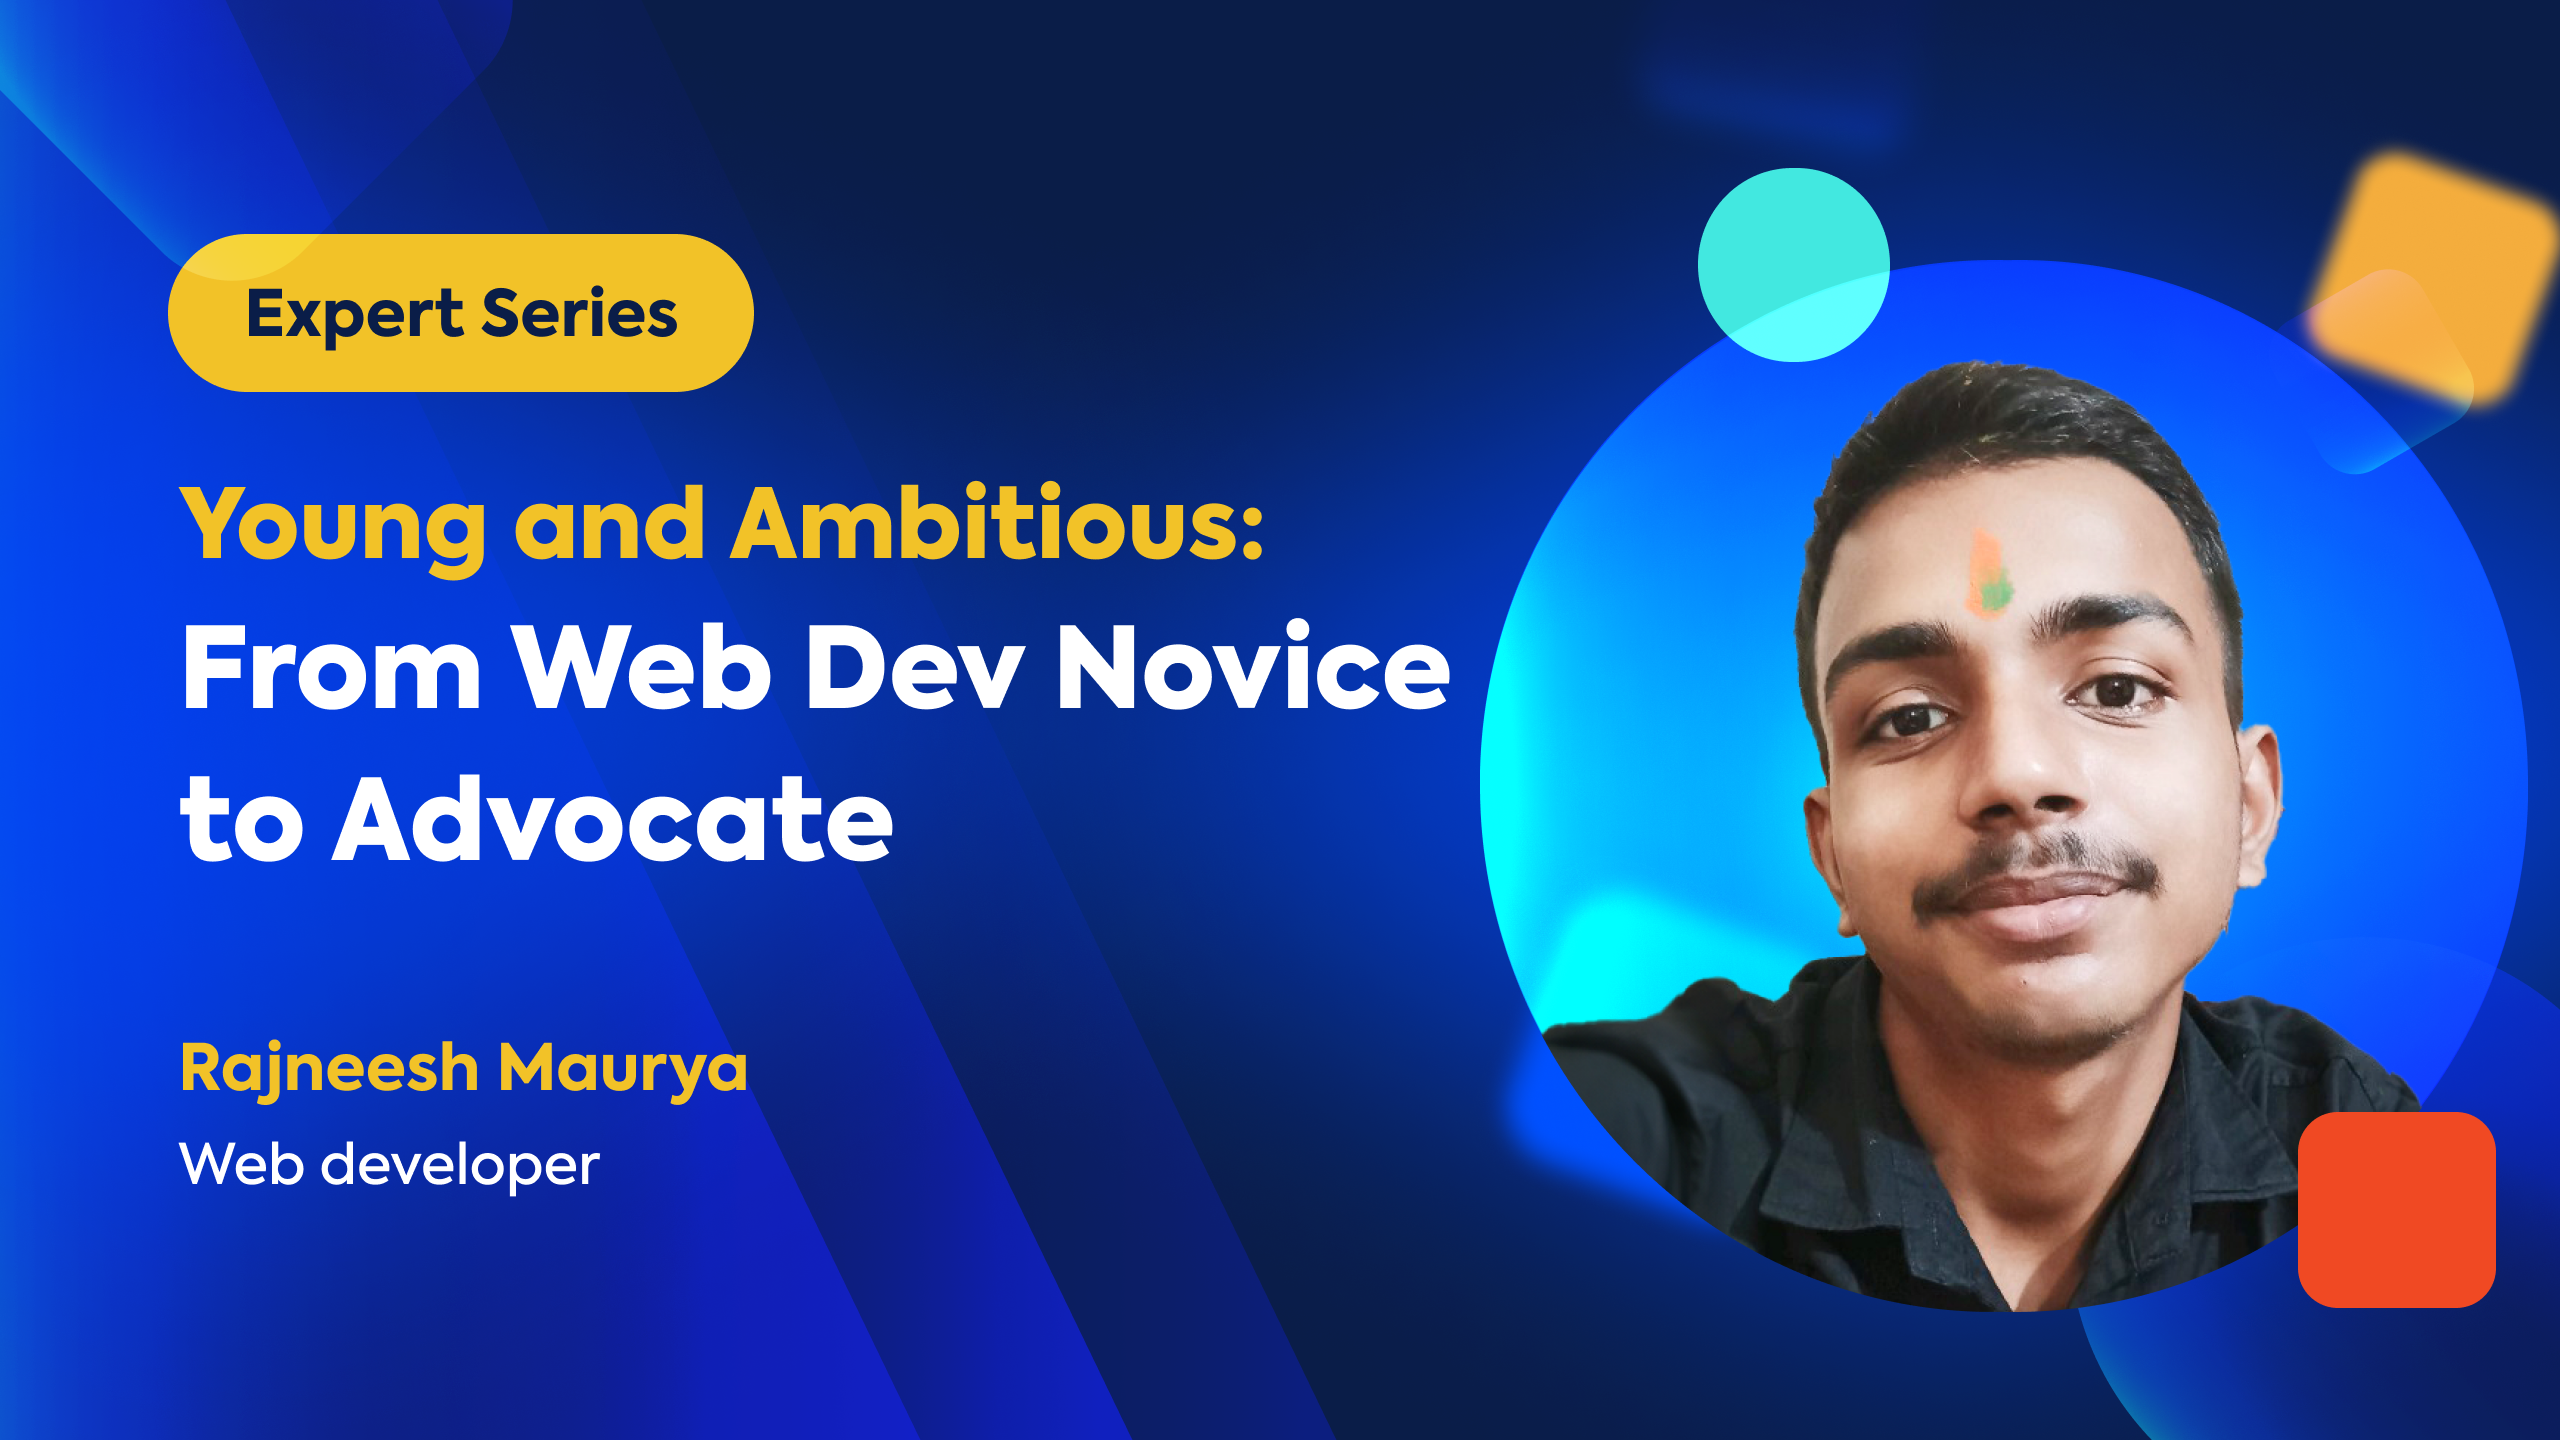 Expert Series: Rajneesh Maurya Web developer and open source contributor